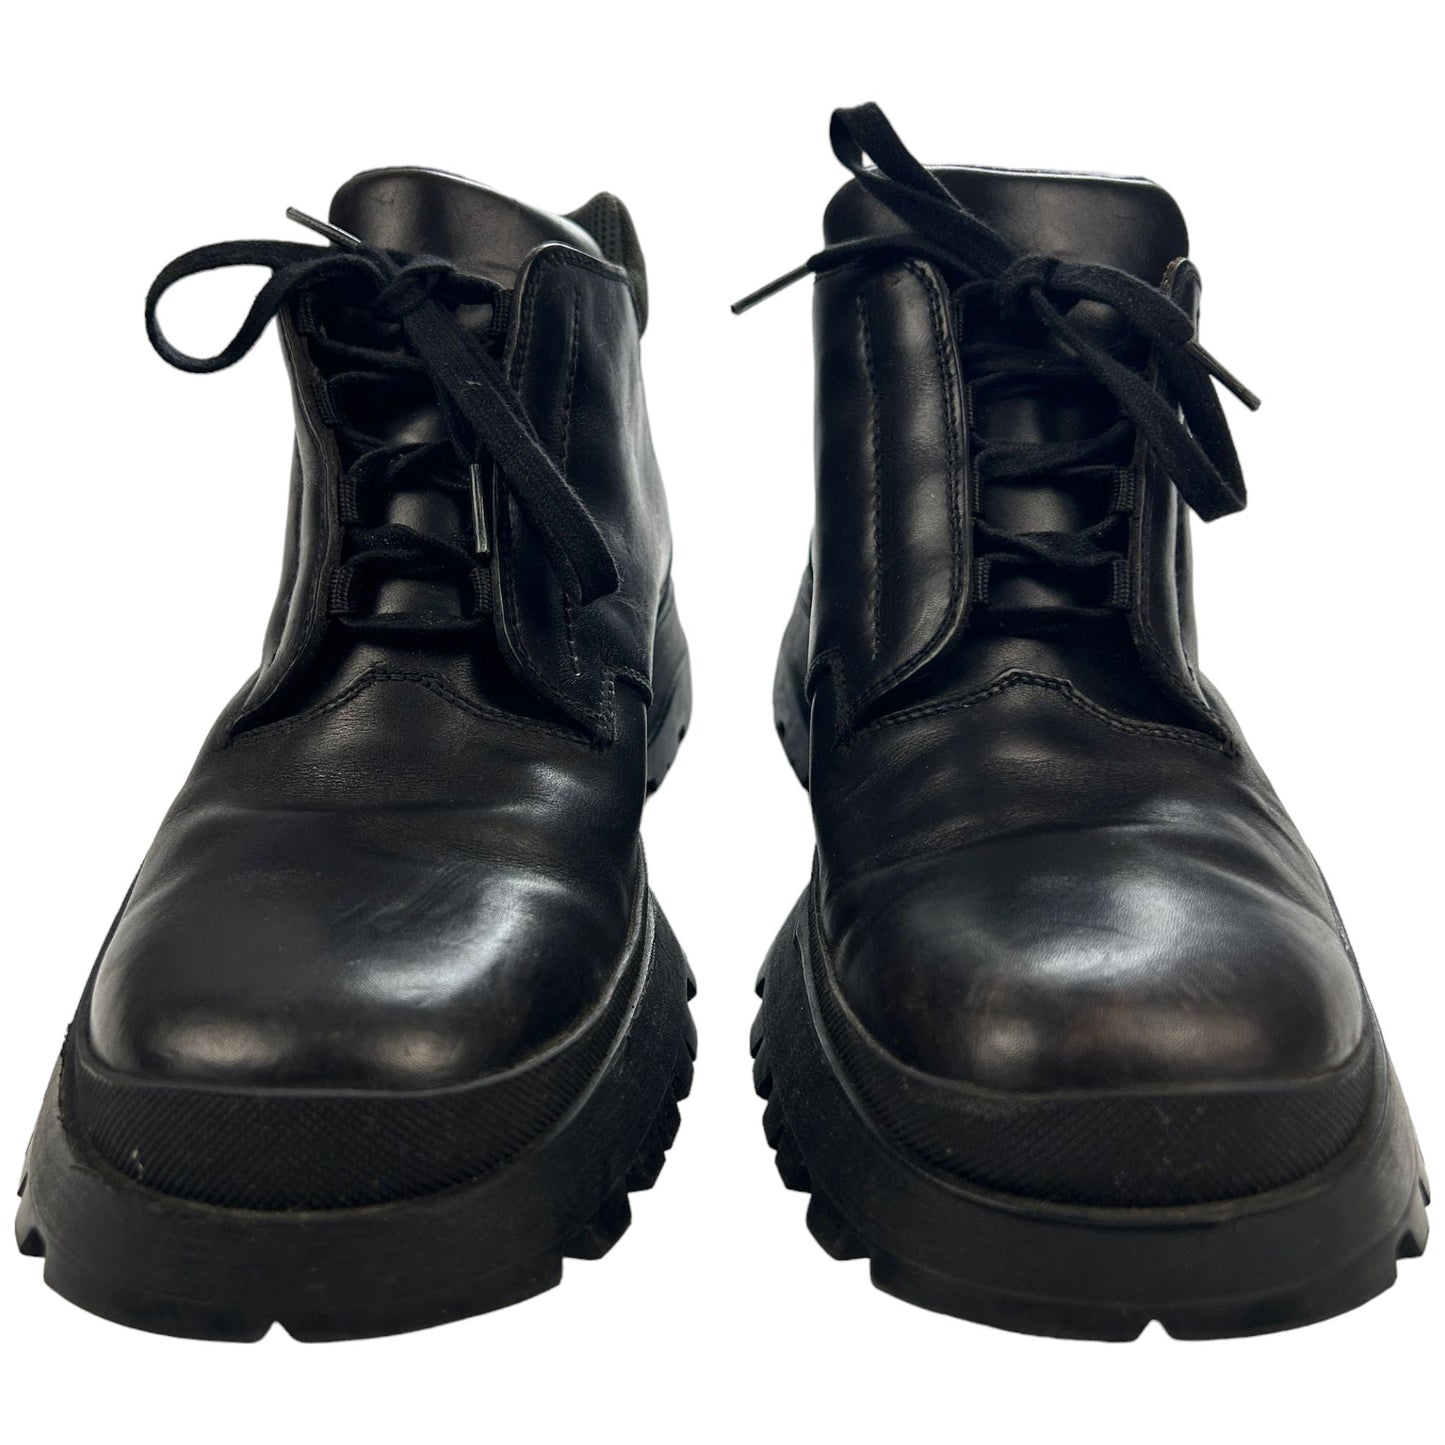 Vintage Prada Vibram Sole Boots Size UK 9